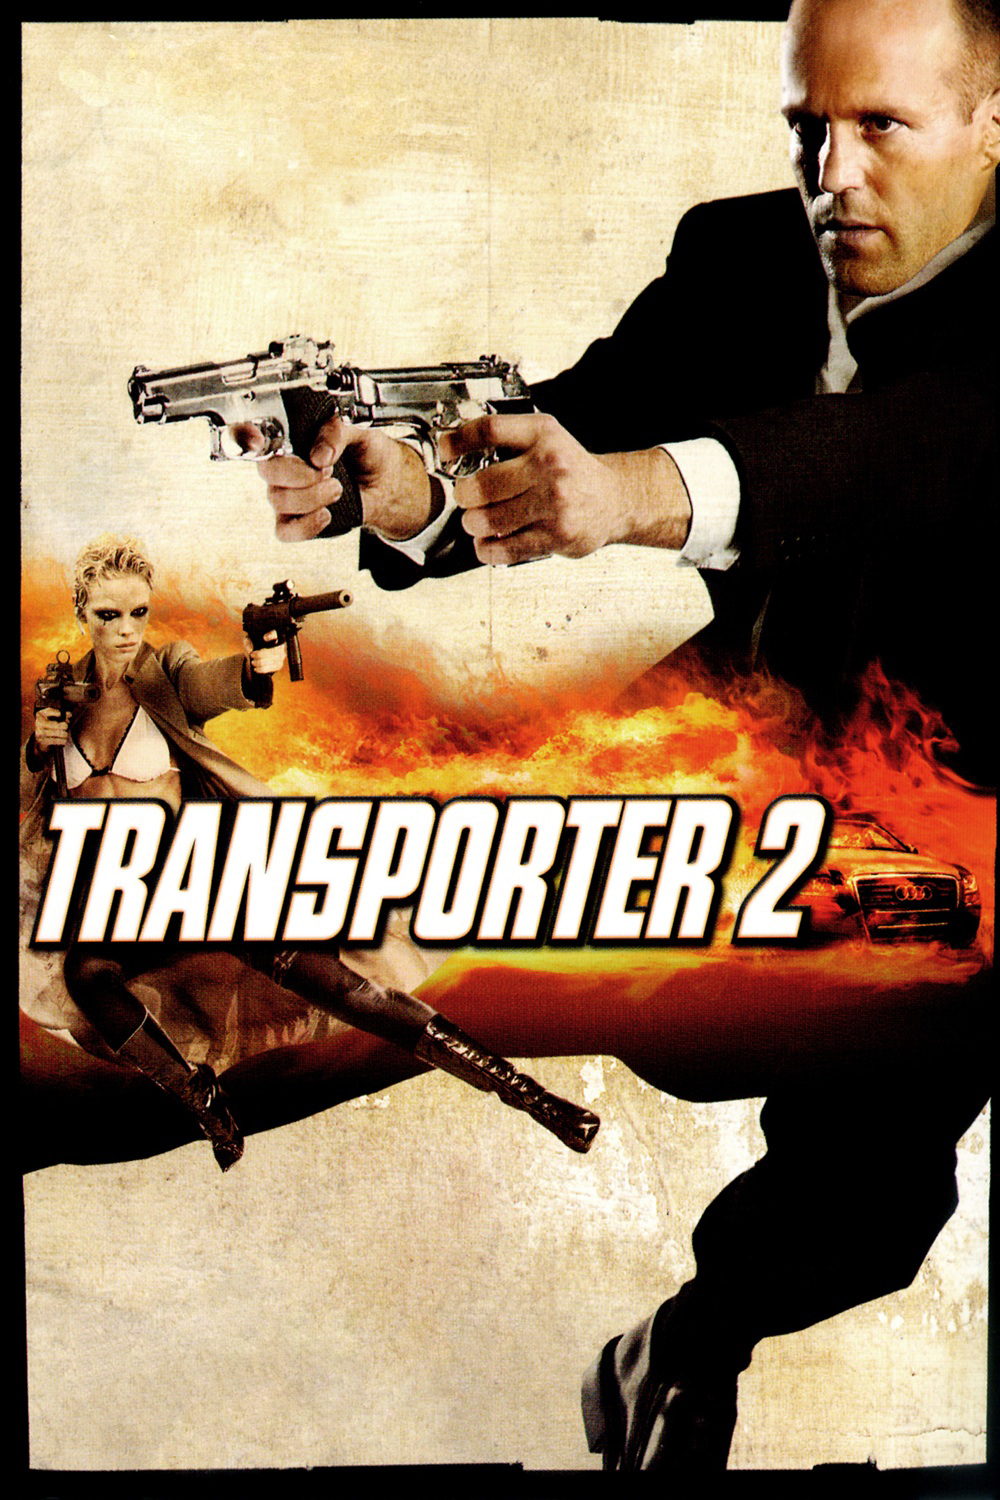 The Transporter 2